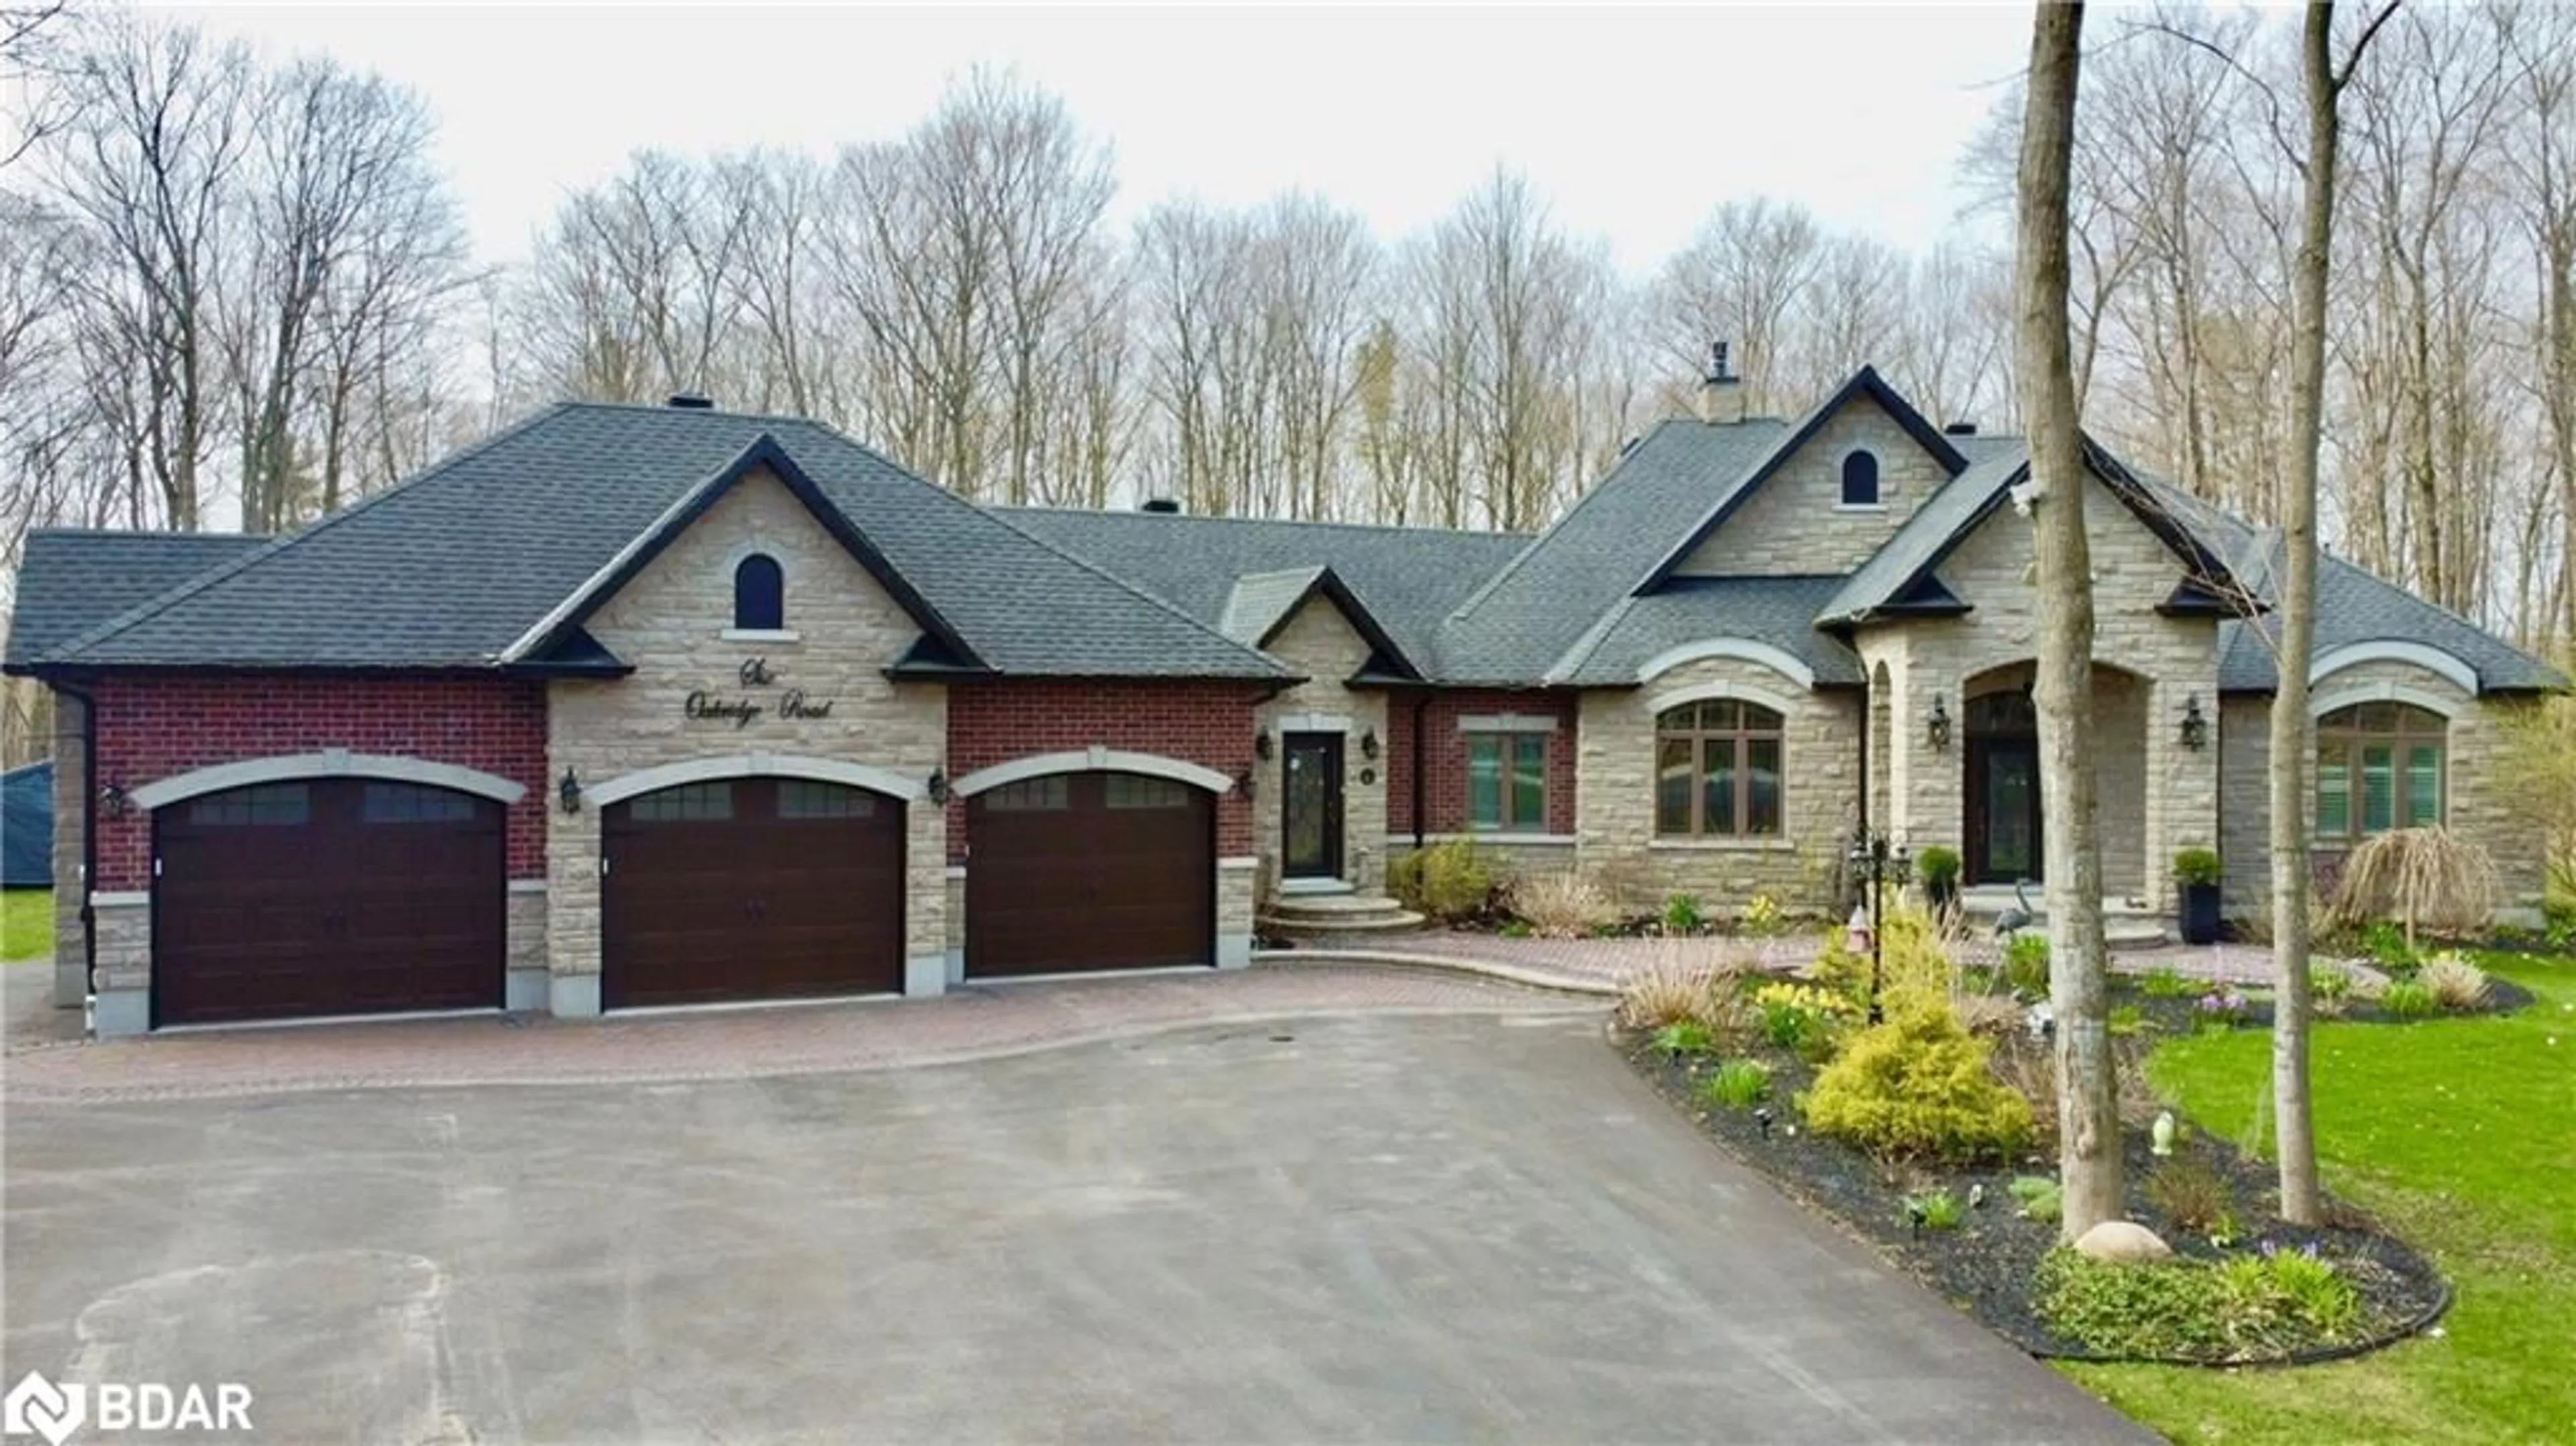 Home with brick exterior material for 6 Oak Ridge Rd, Oro-Medonte Ontario L0L 2L0